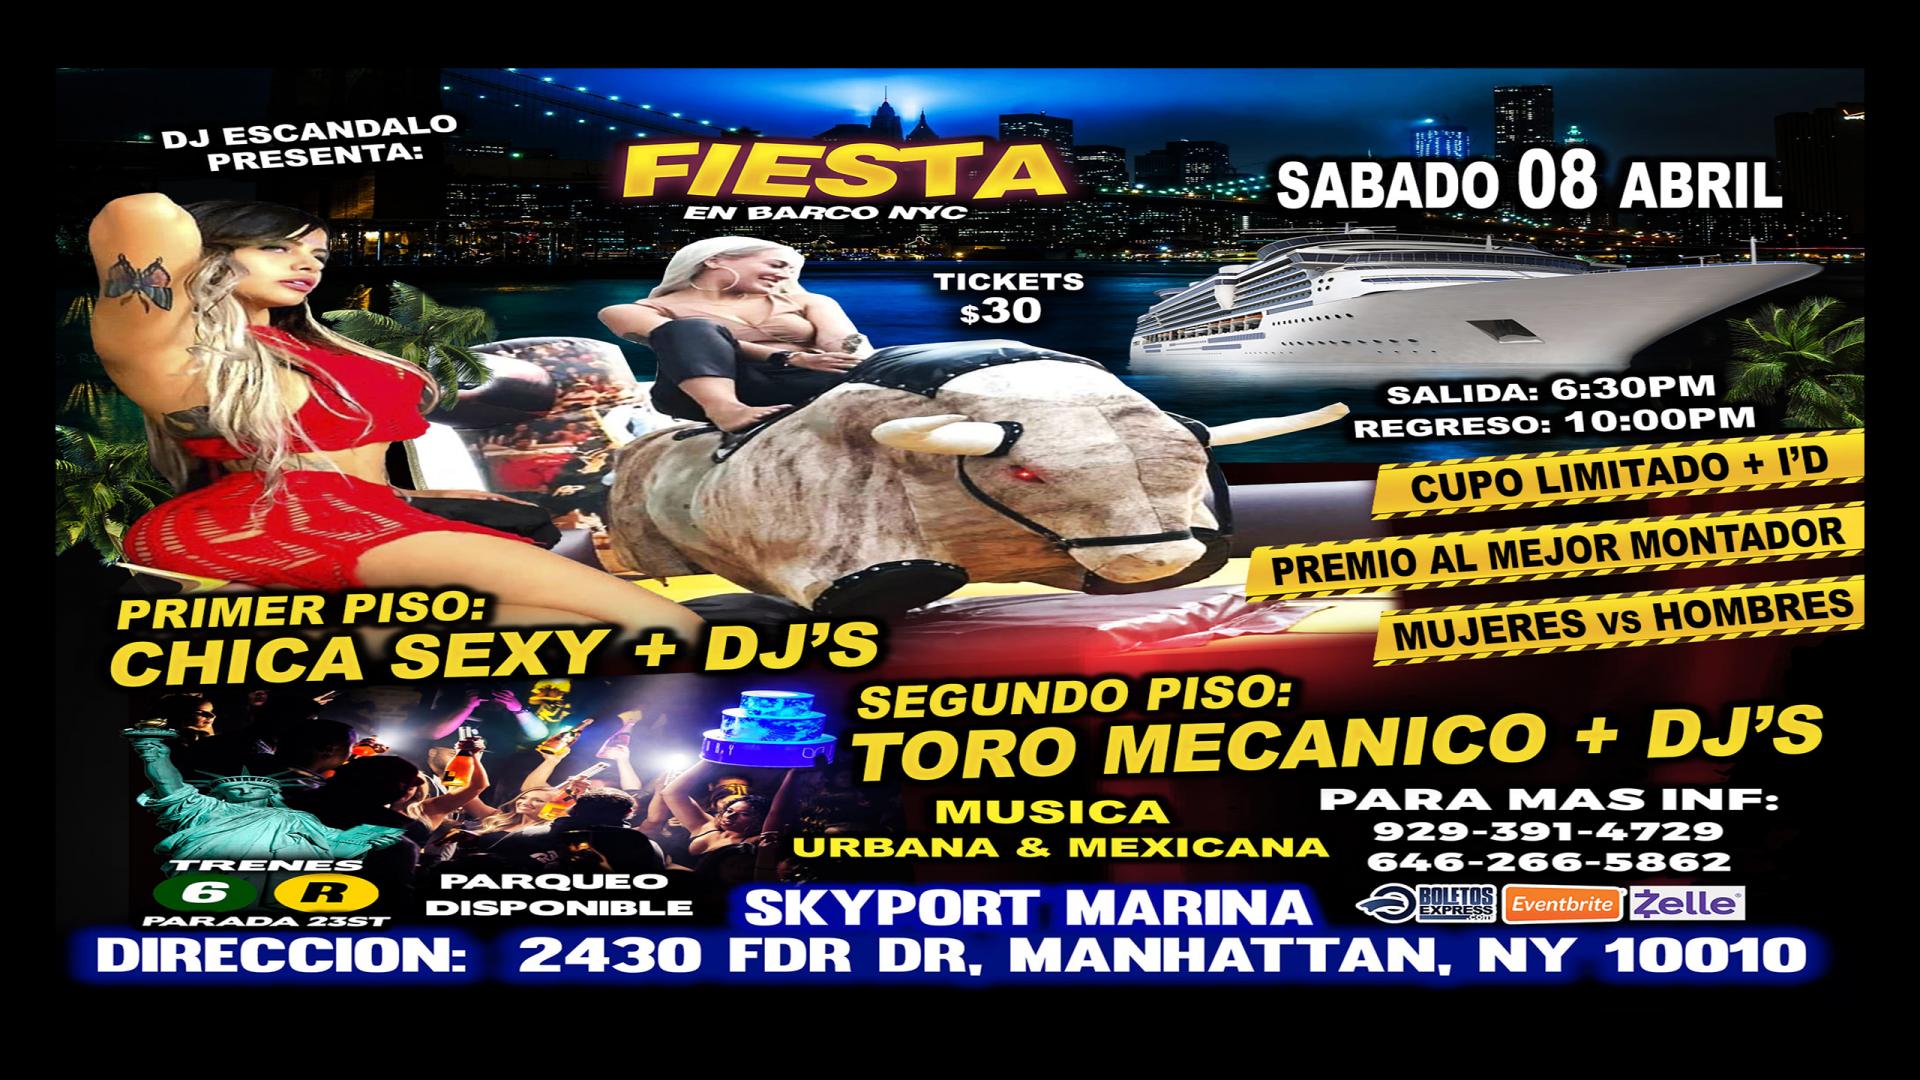 Fiesta En Barco + Toro Mecanico + Chica Sexy + Radio Dj's